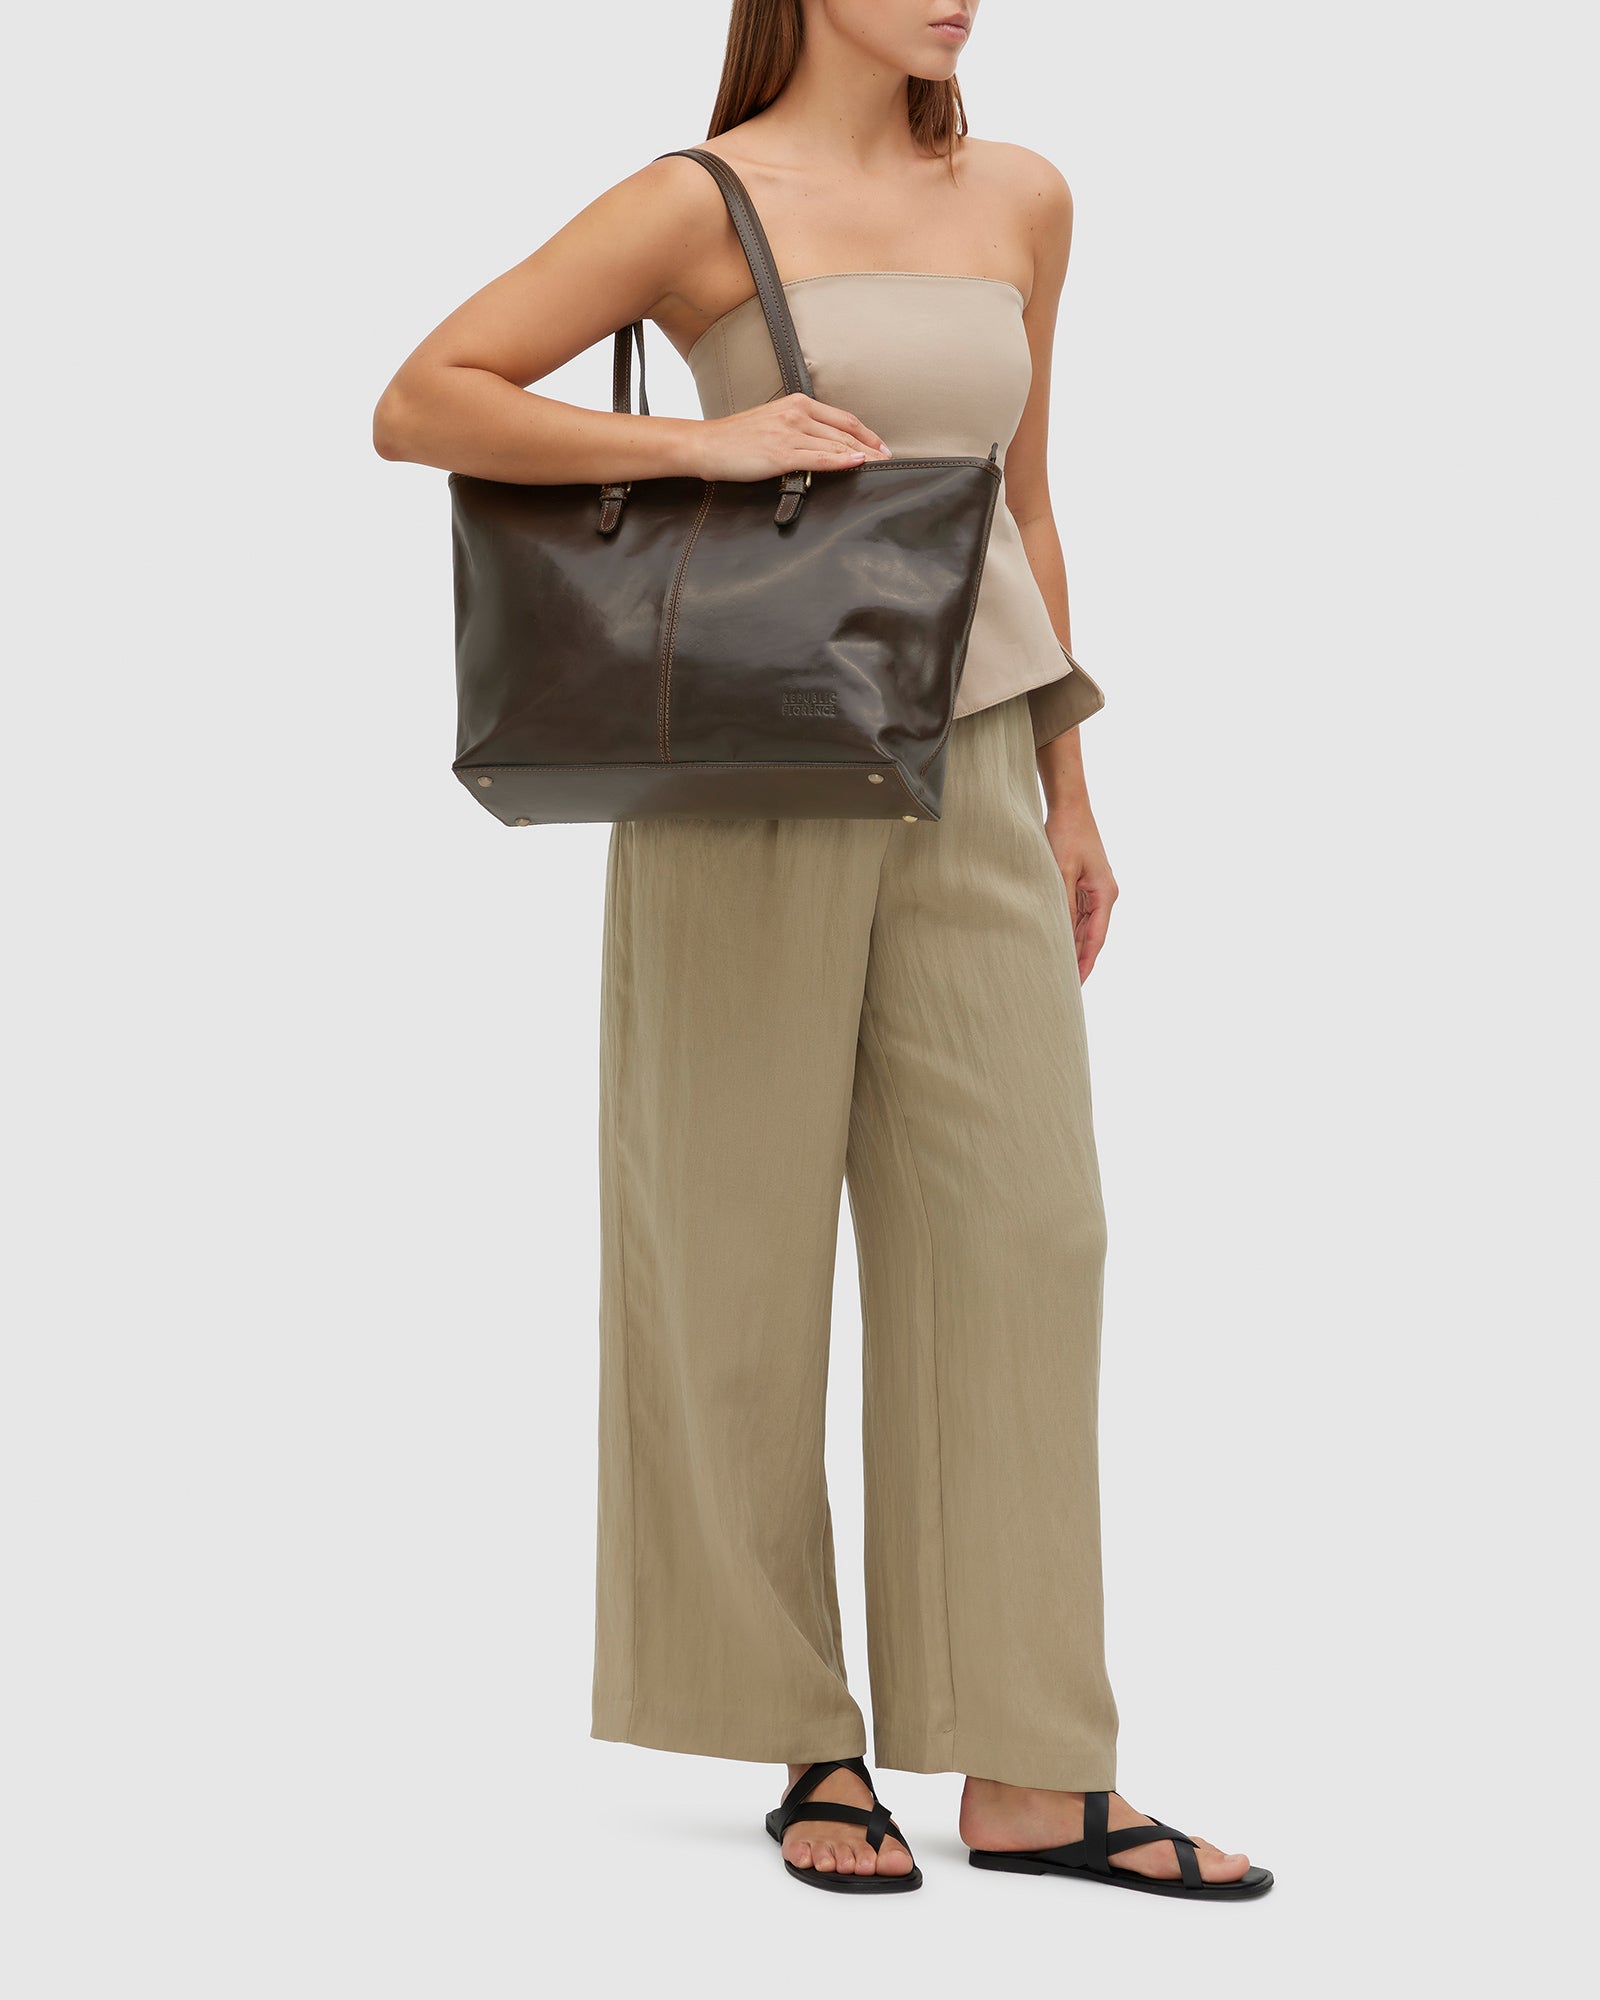 Elena Chocolate - Leather Tote Bag